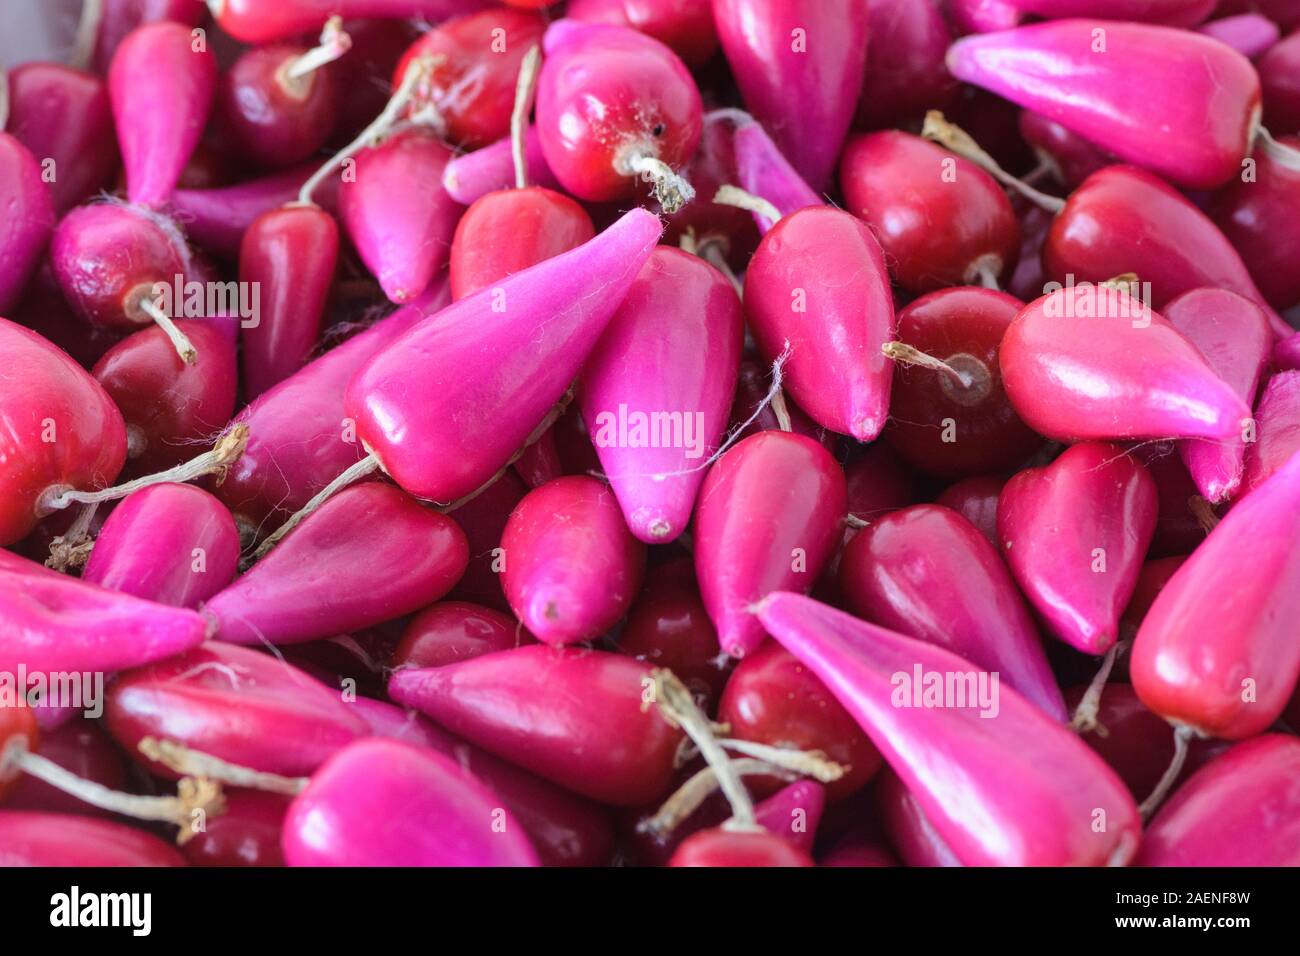 Pitiguey pink fruits assortment marketplace. Stock Photo